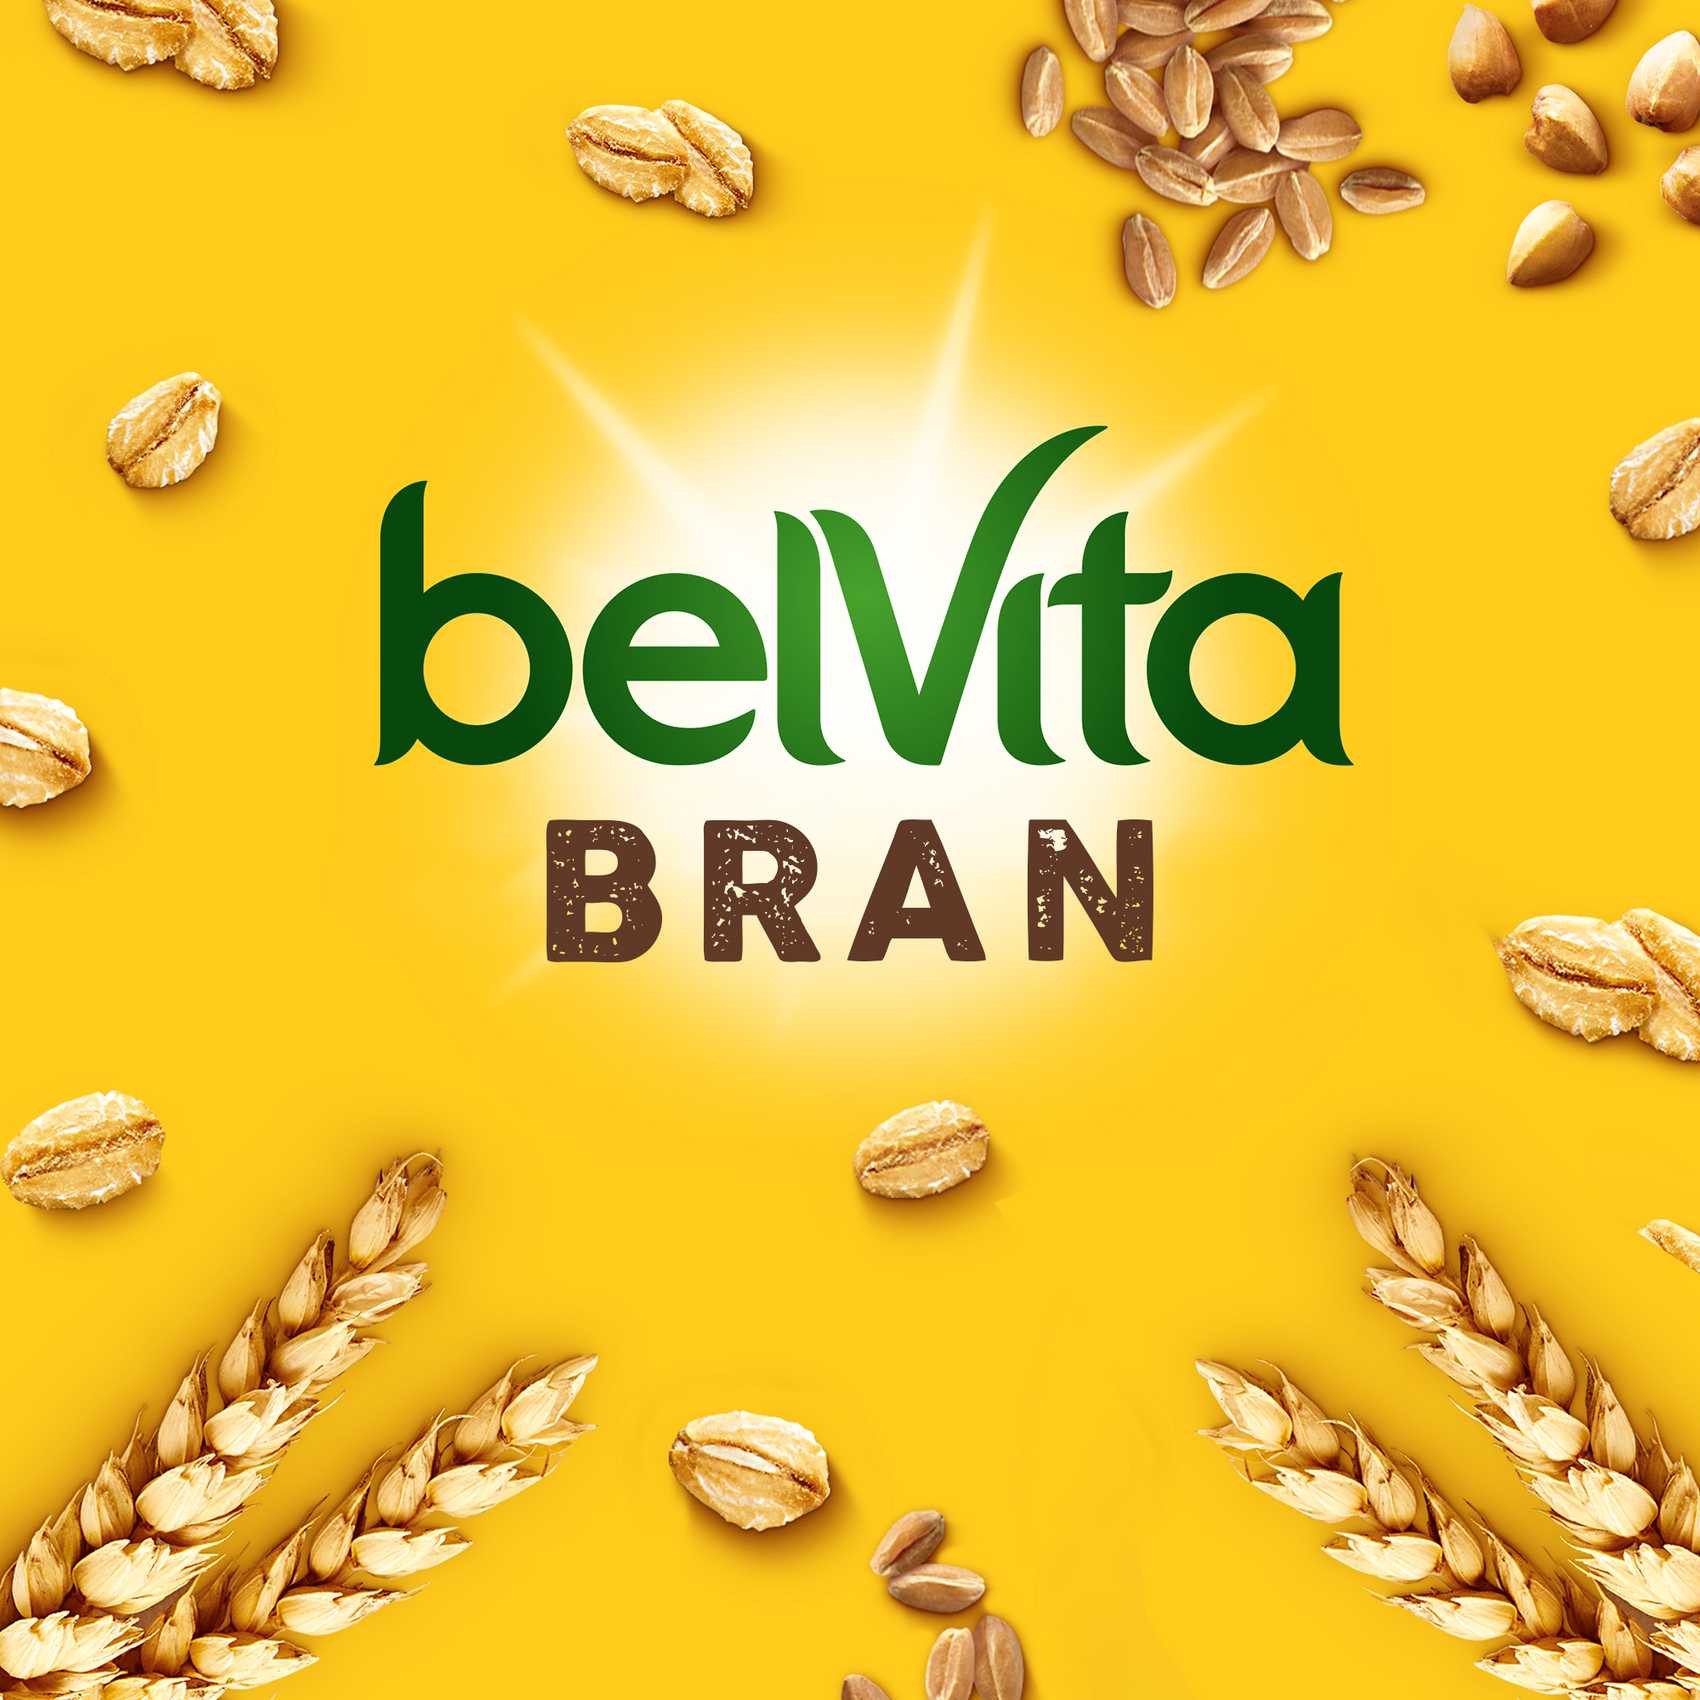 Belvita Bran Biscuit 56g